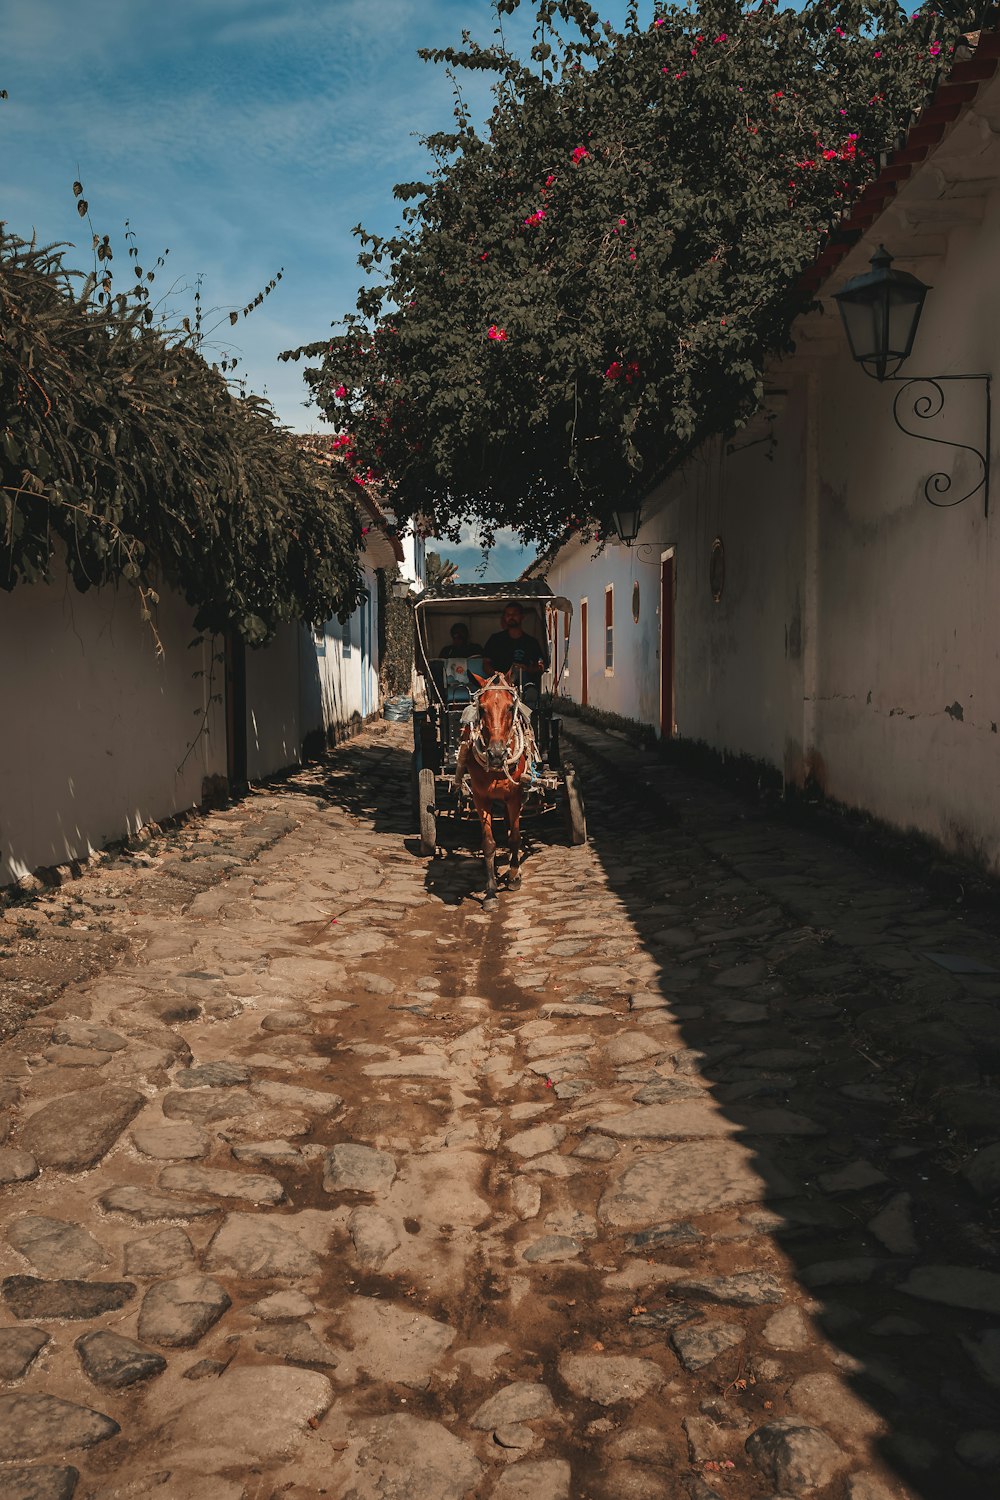 a horse pulling a cart down a cobblestone street